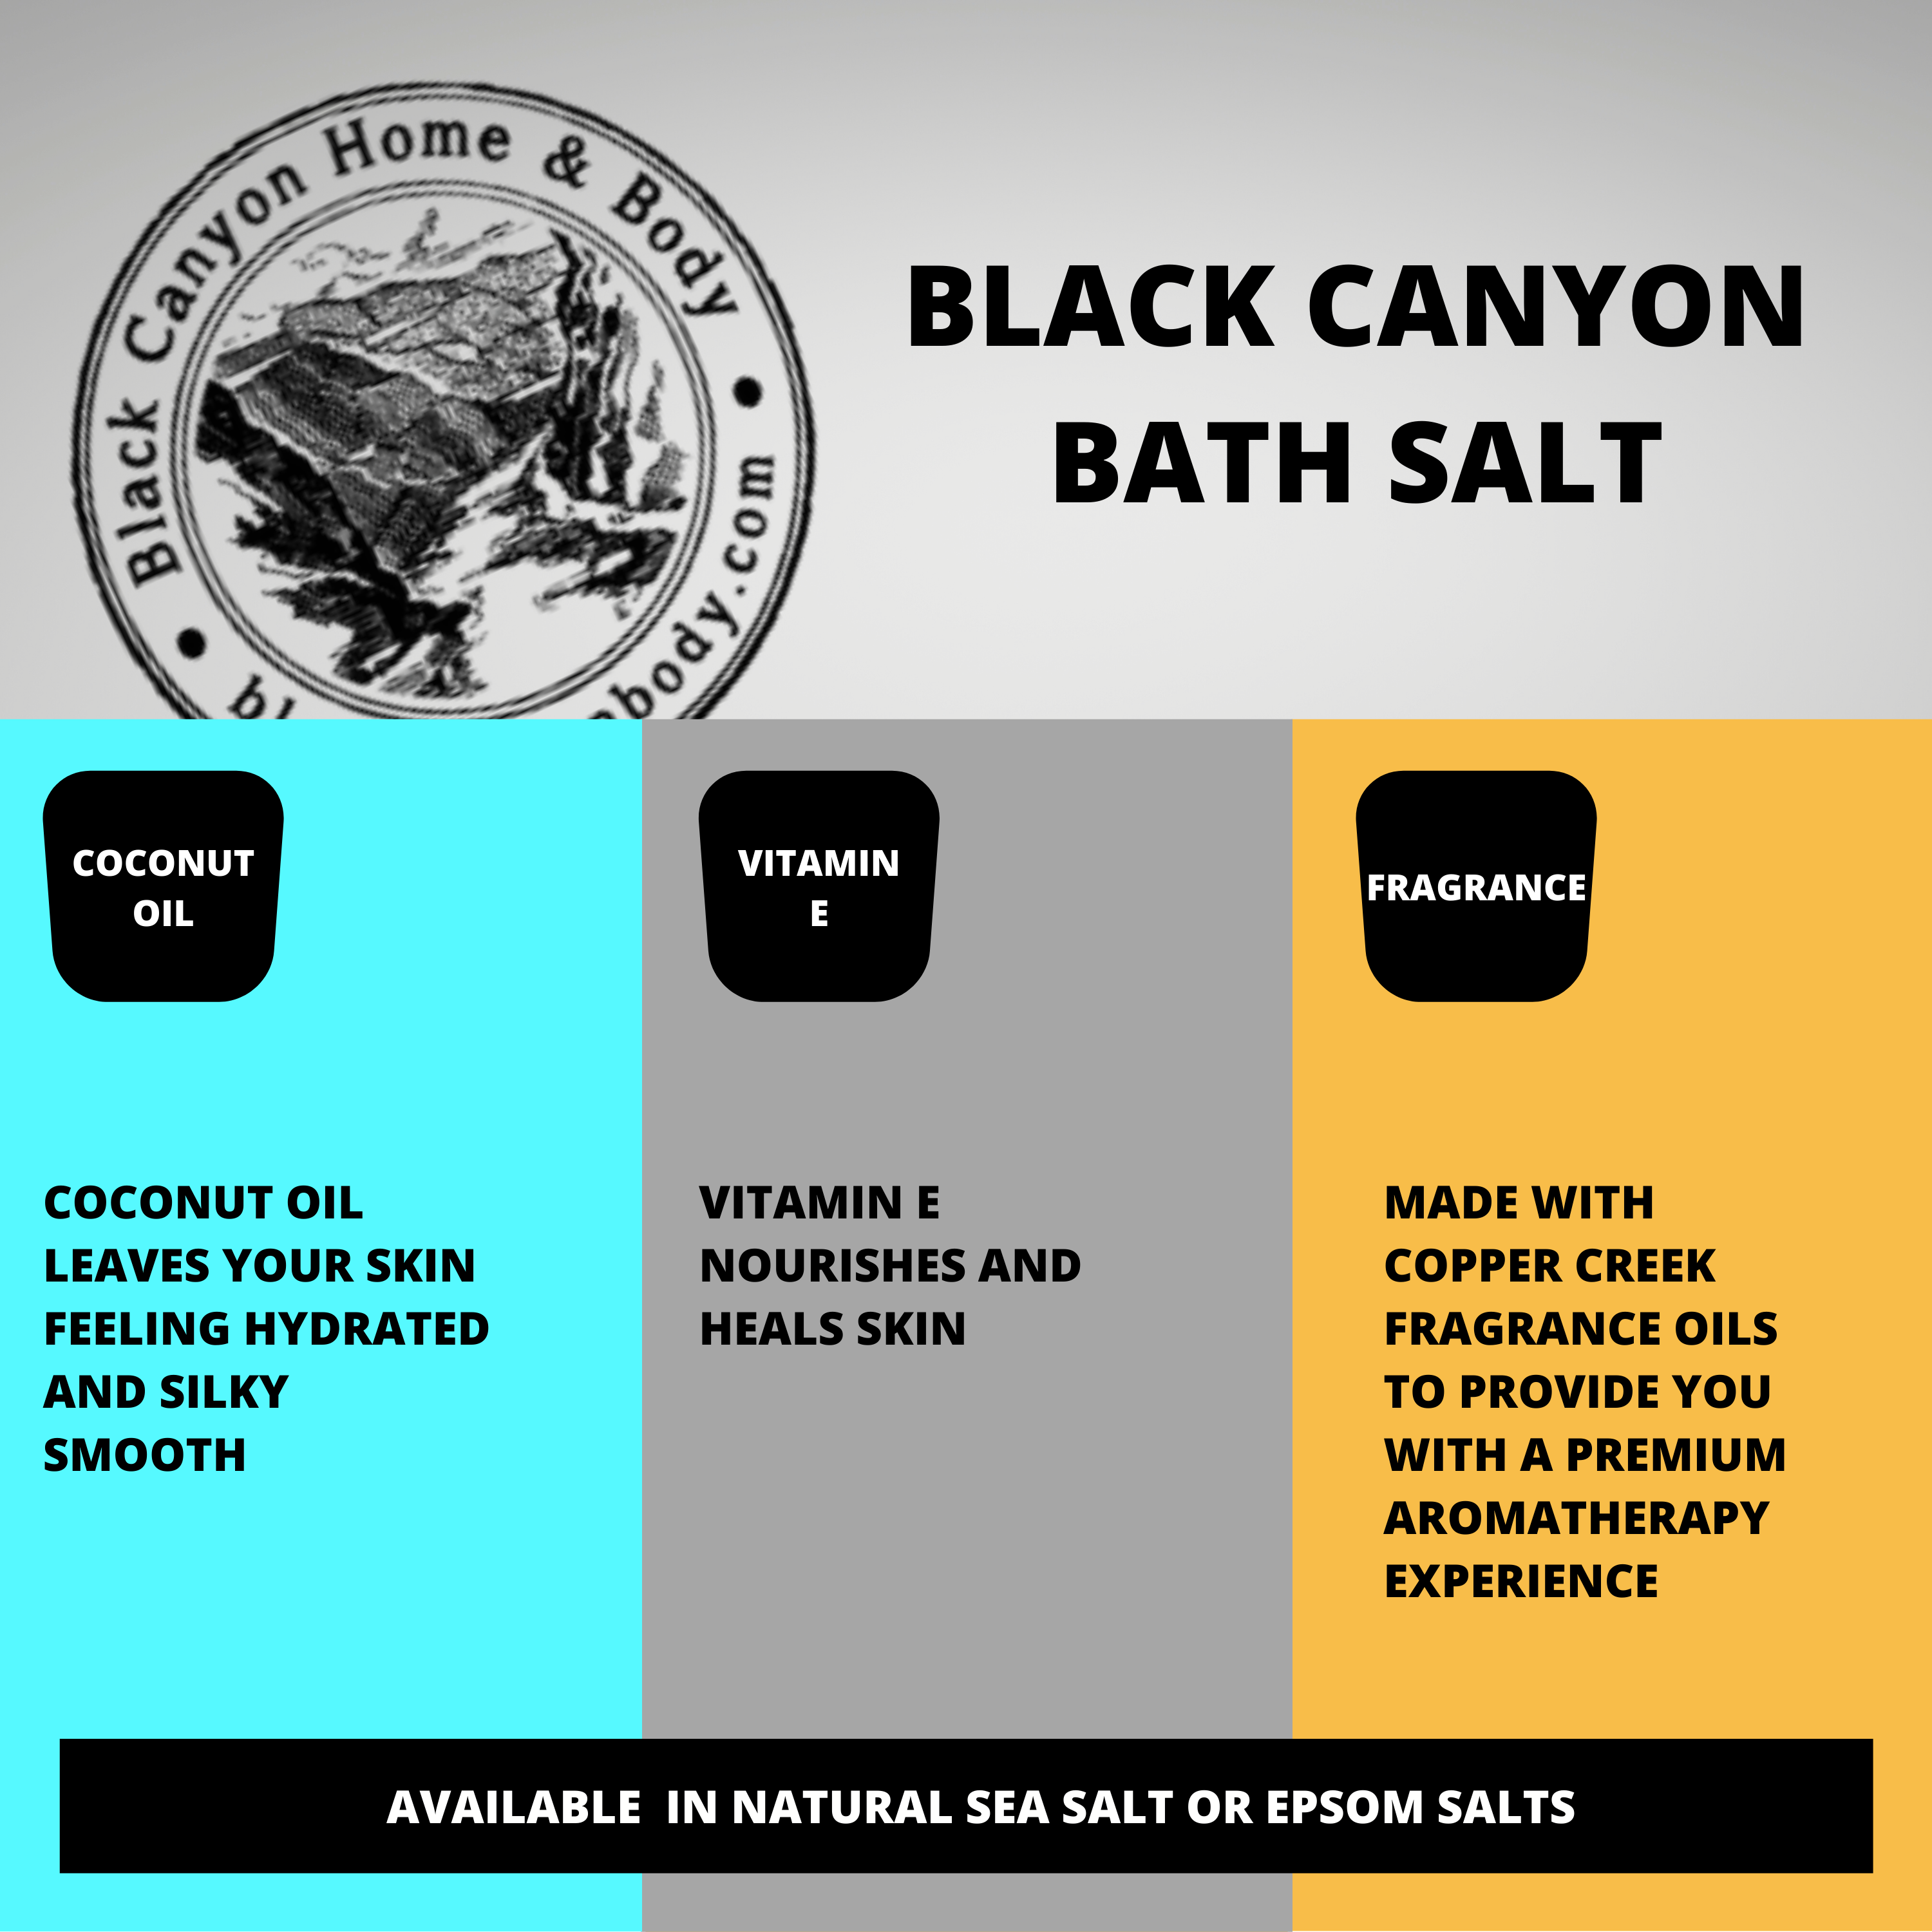 Paydens Cobalt Nutmeg & Sandalwood Scented Epsom Salt Bath Soak For Men